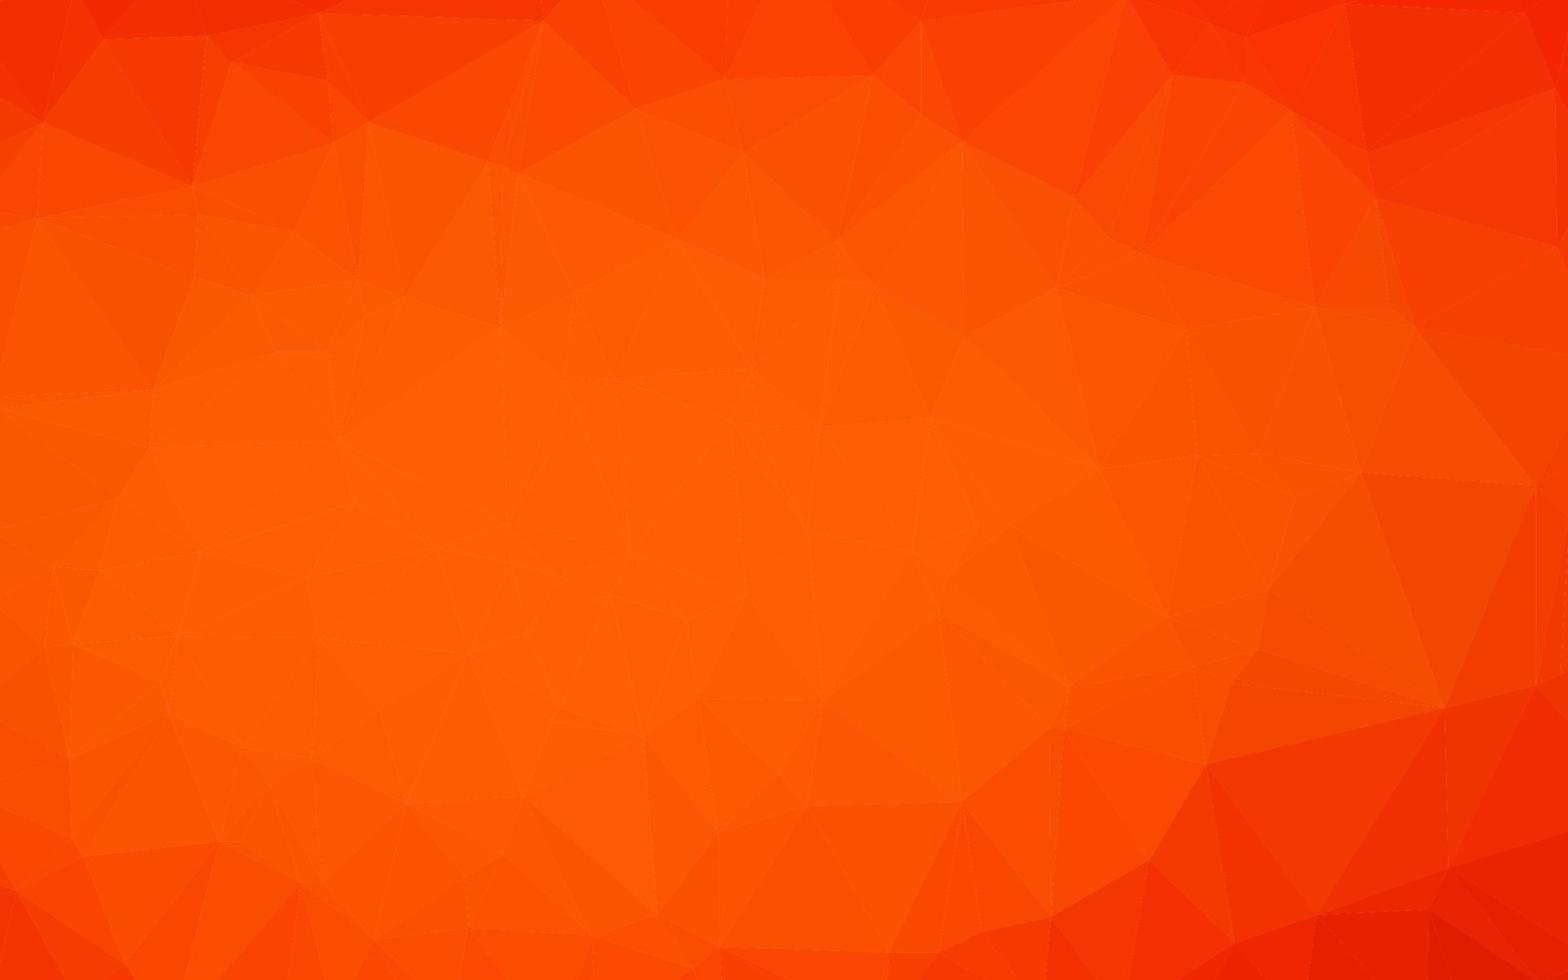 fundo poligonal do vetor laranja claro.